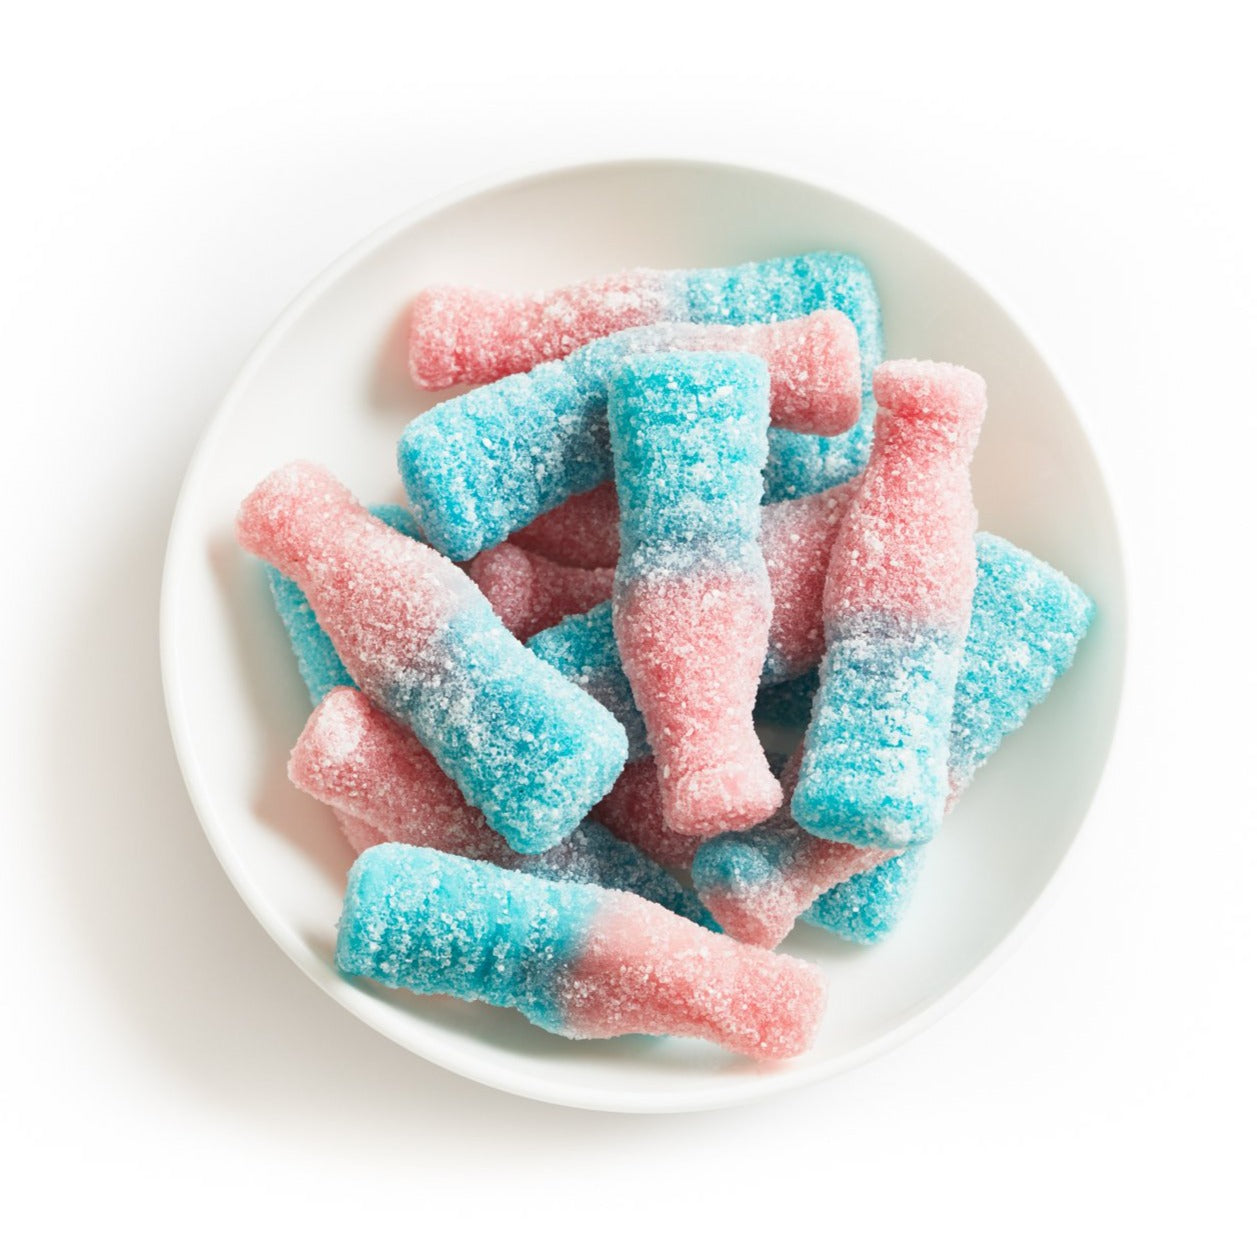 Pop 100g – Yum Swedish Candy